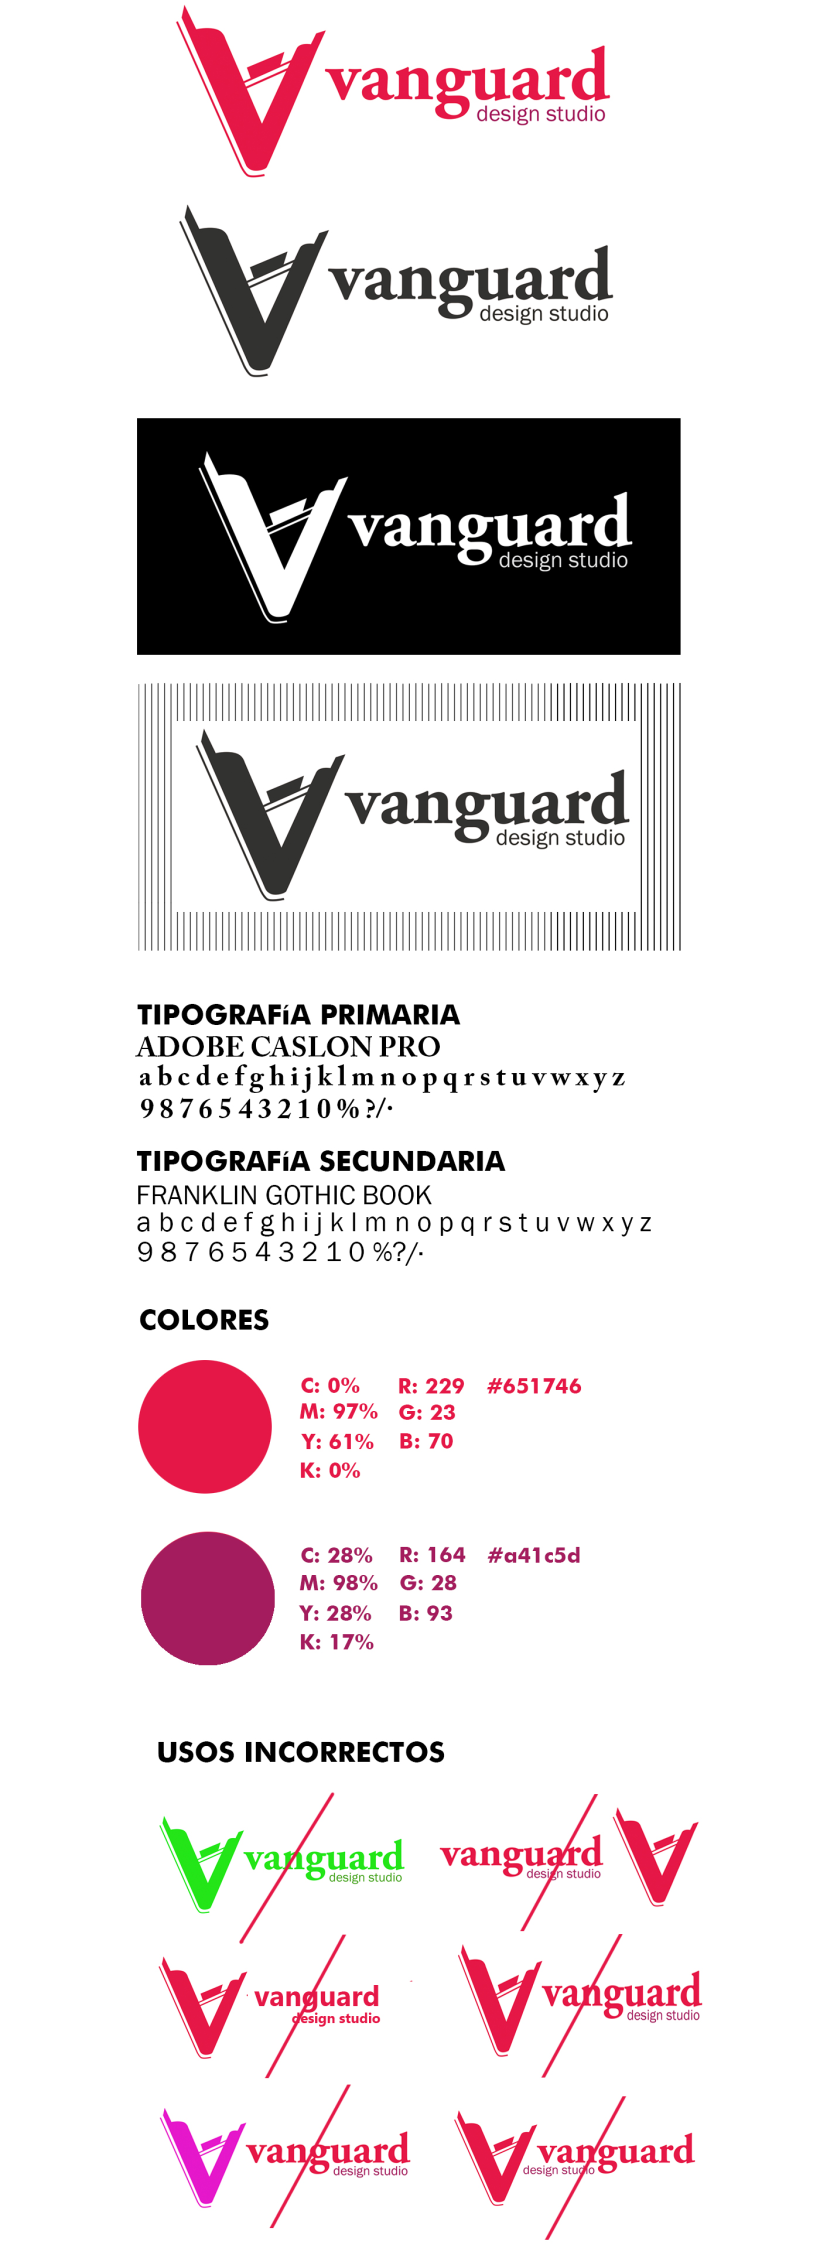 Vanguard Design Studio 2